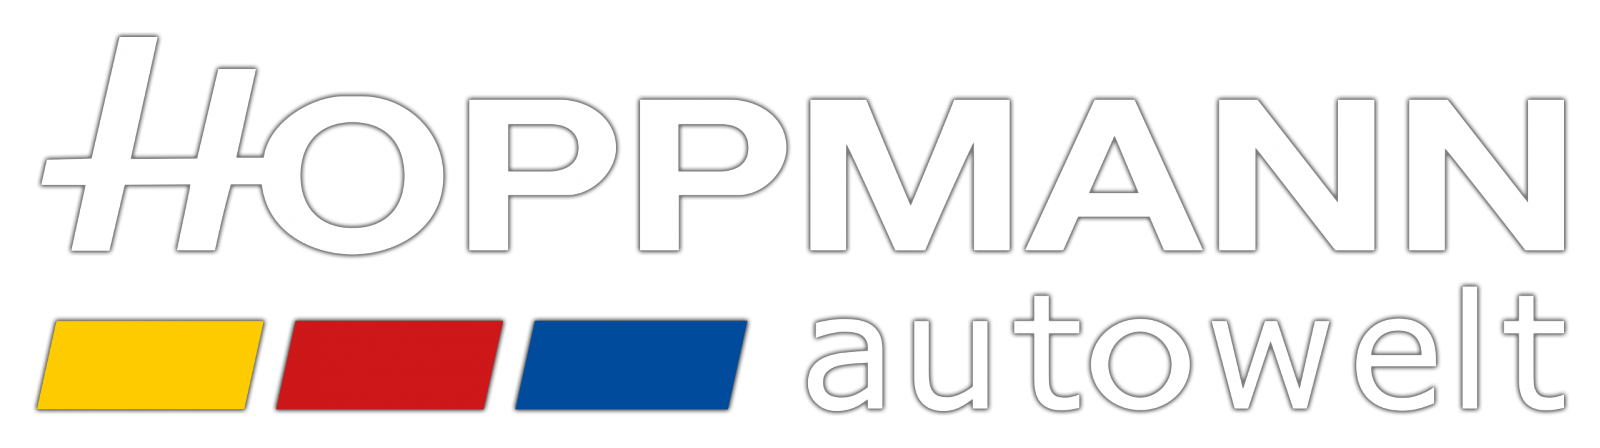 Hoppmann Automobil Olpe - VW / Audi - Vertragswerkstatt logo